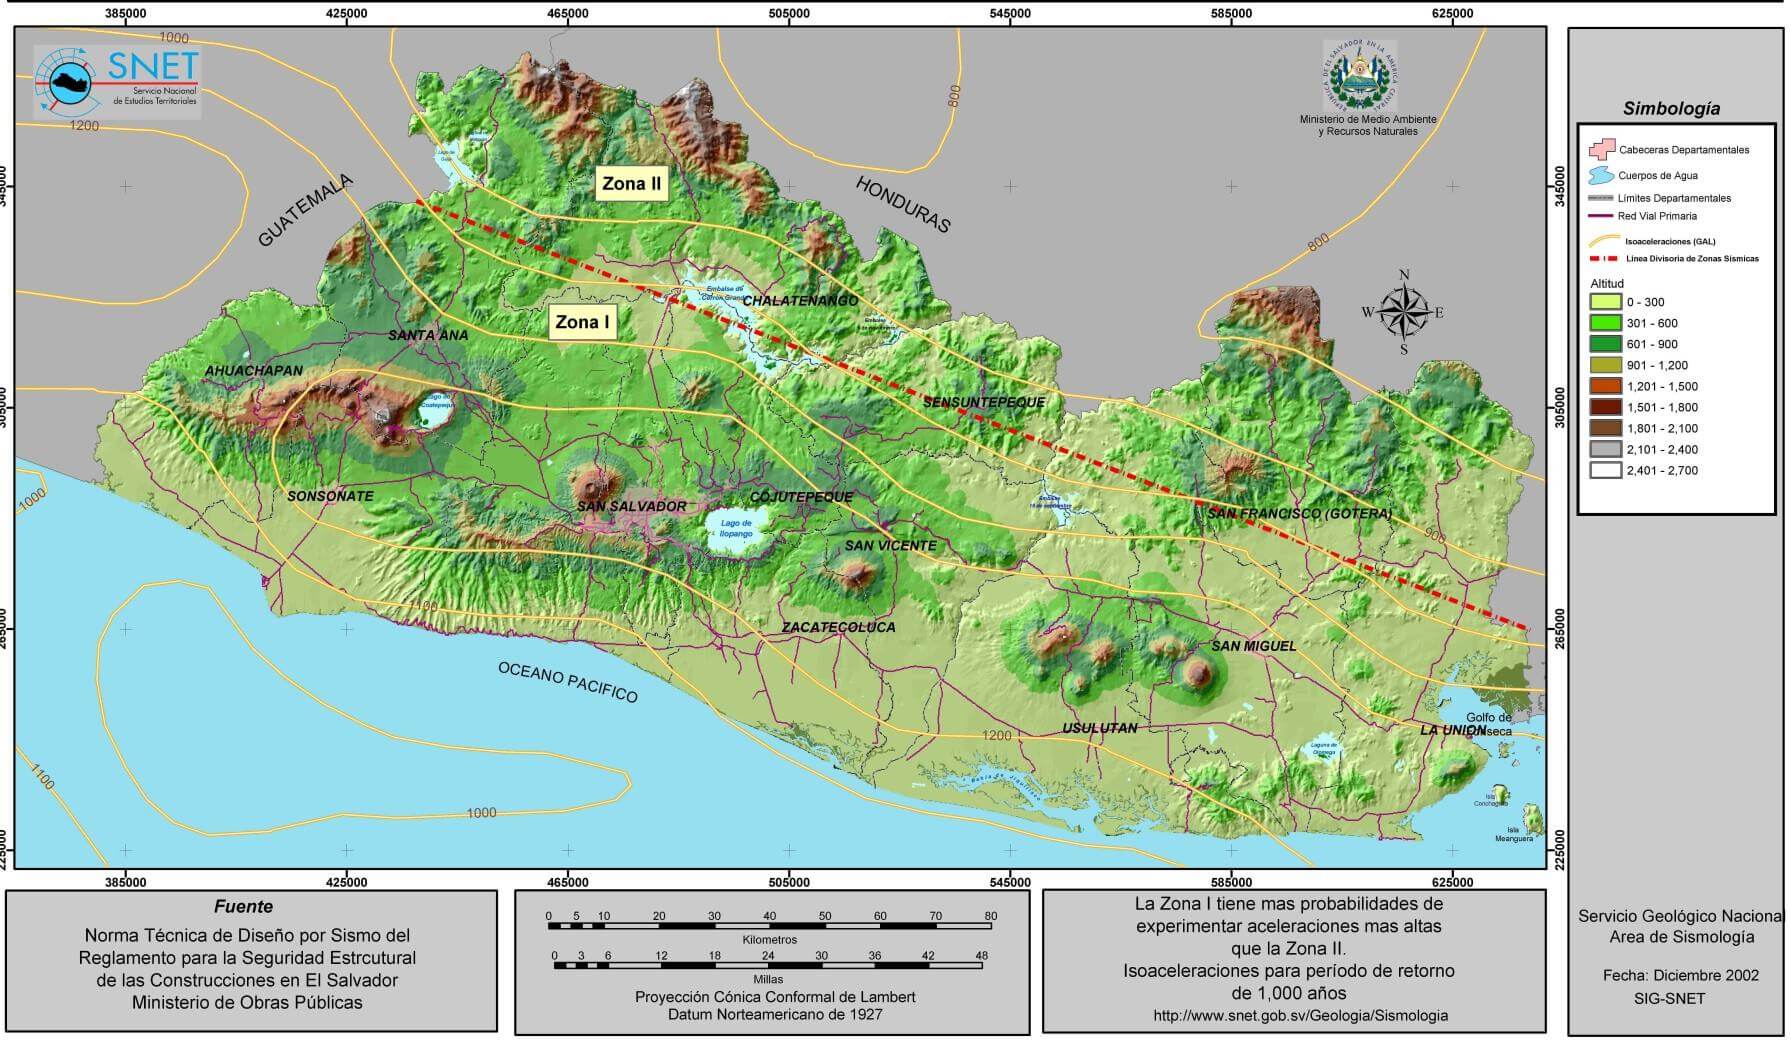 Seismicity Map of El Salvador